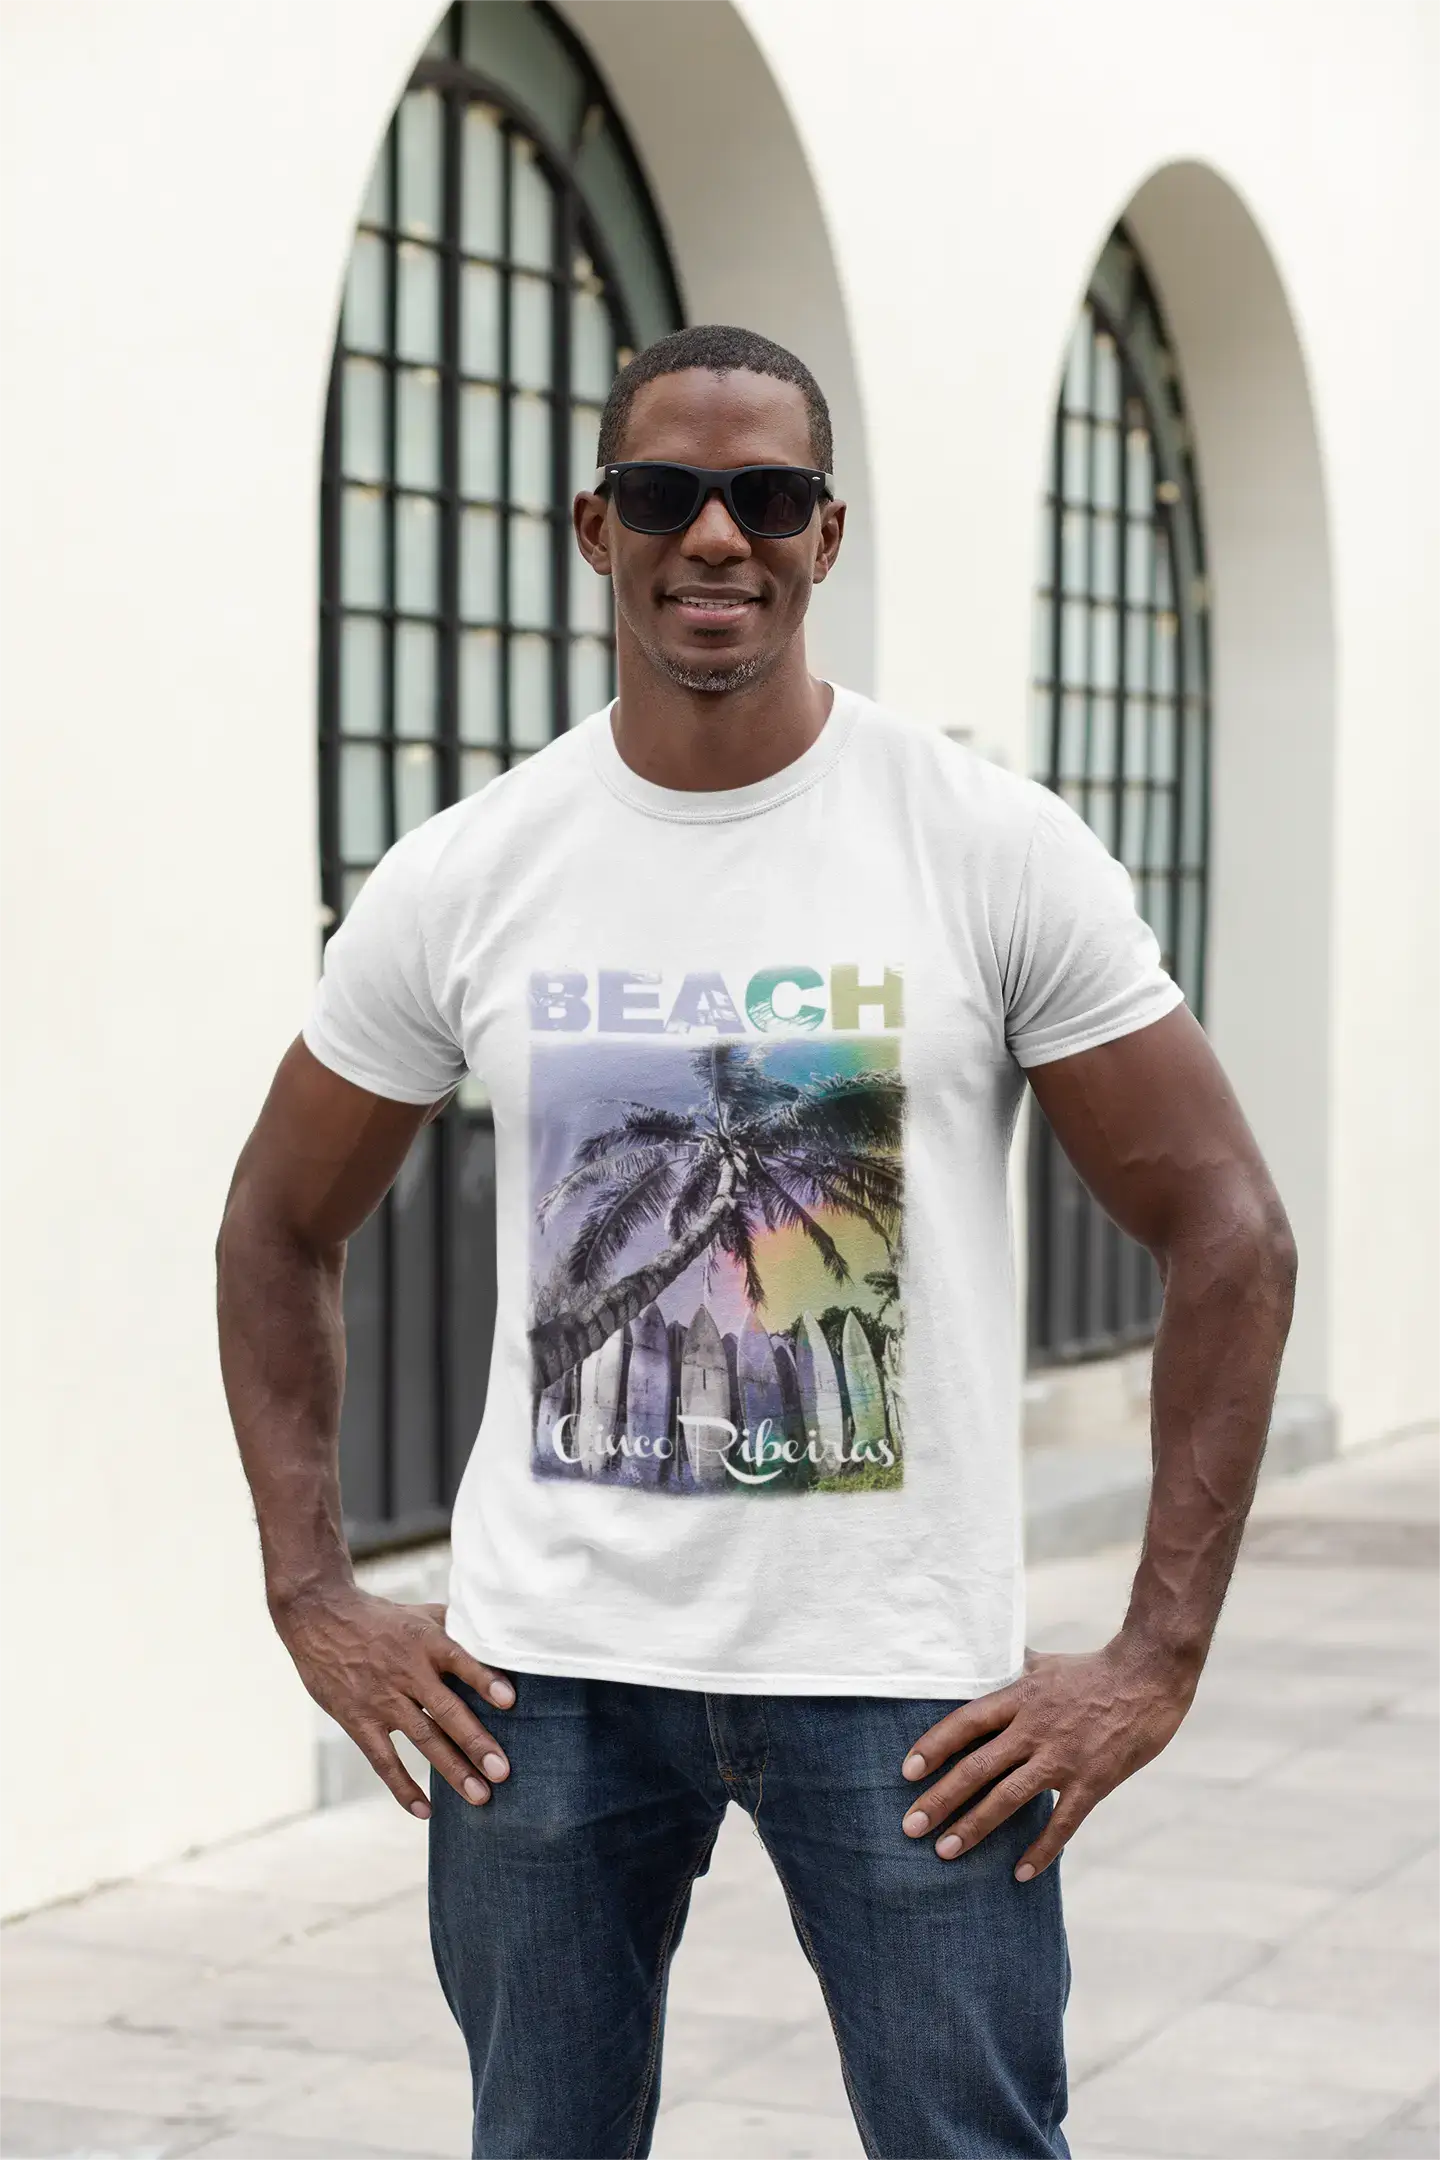 Cinco Ribeiras, Beach Palm, blanc, T-shirt à manches courtes et col rond pour homme